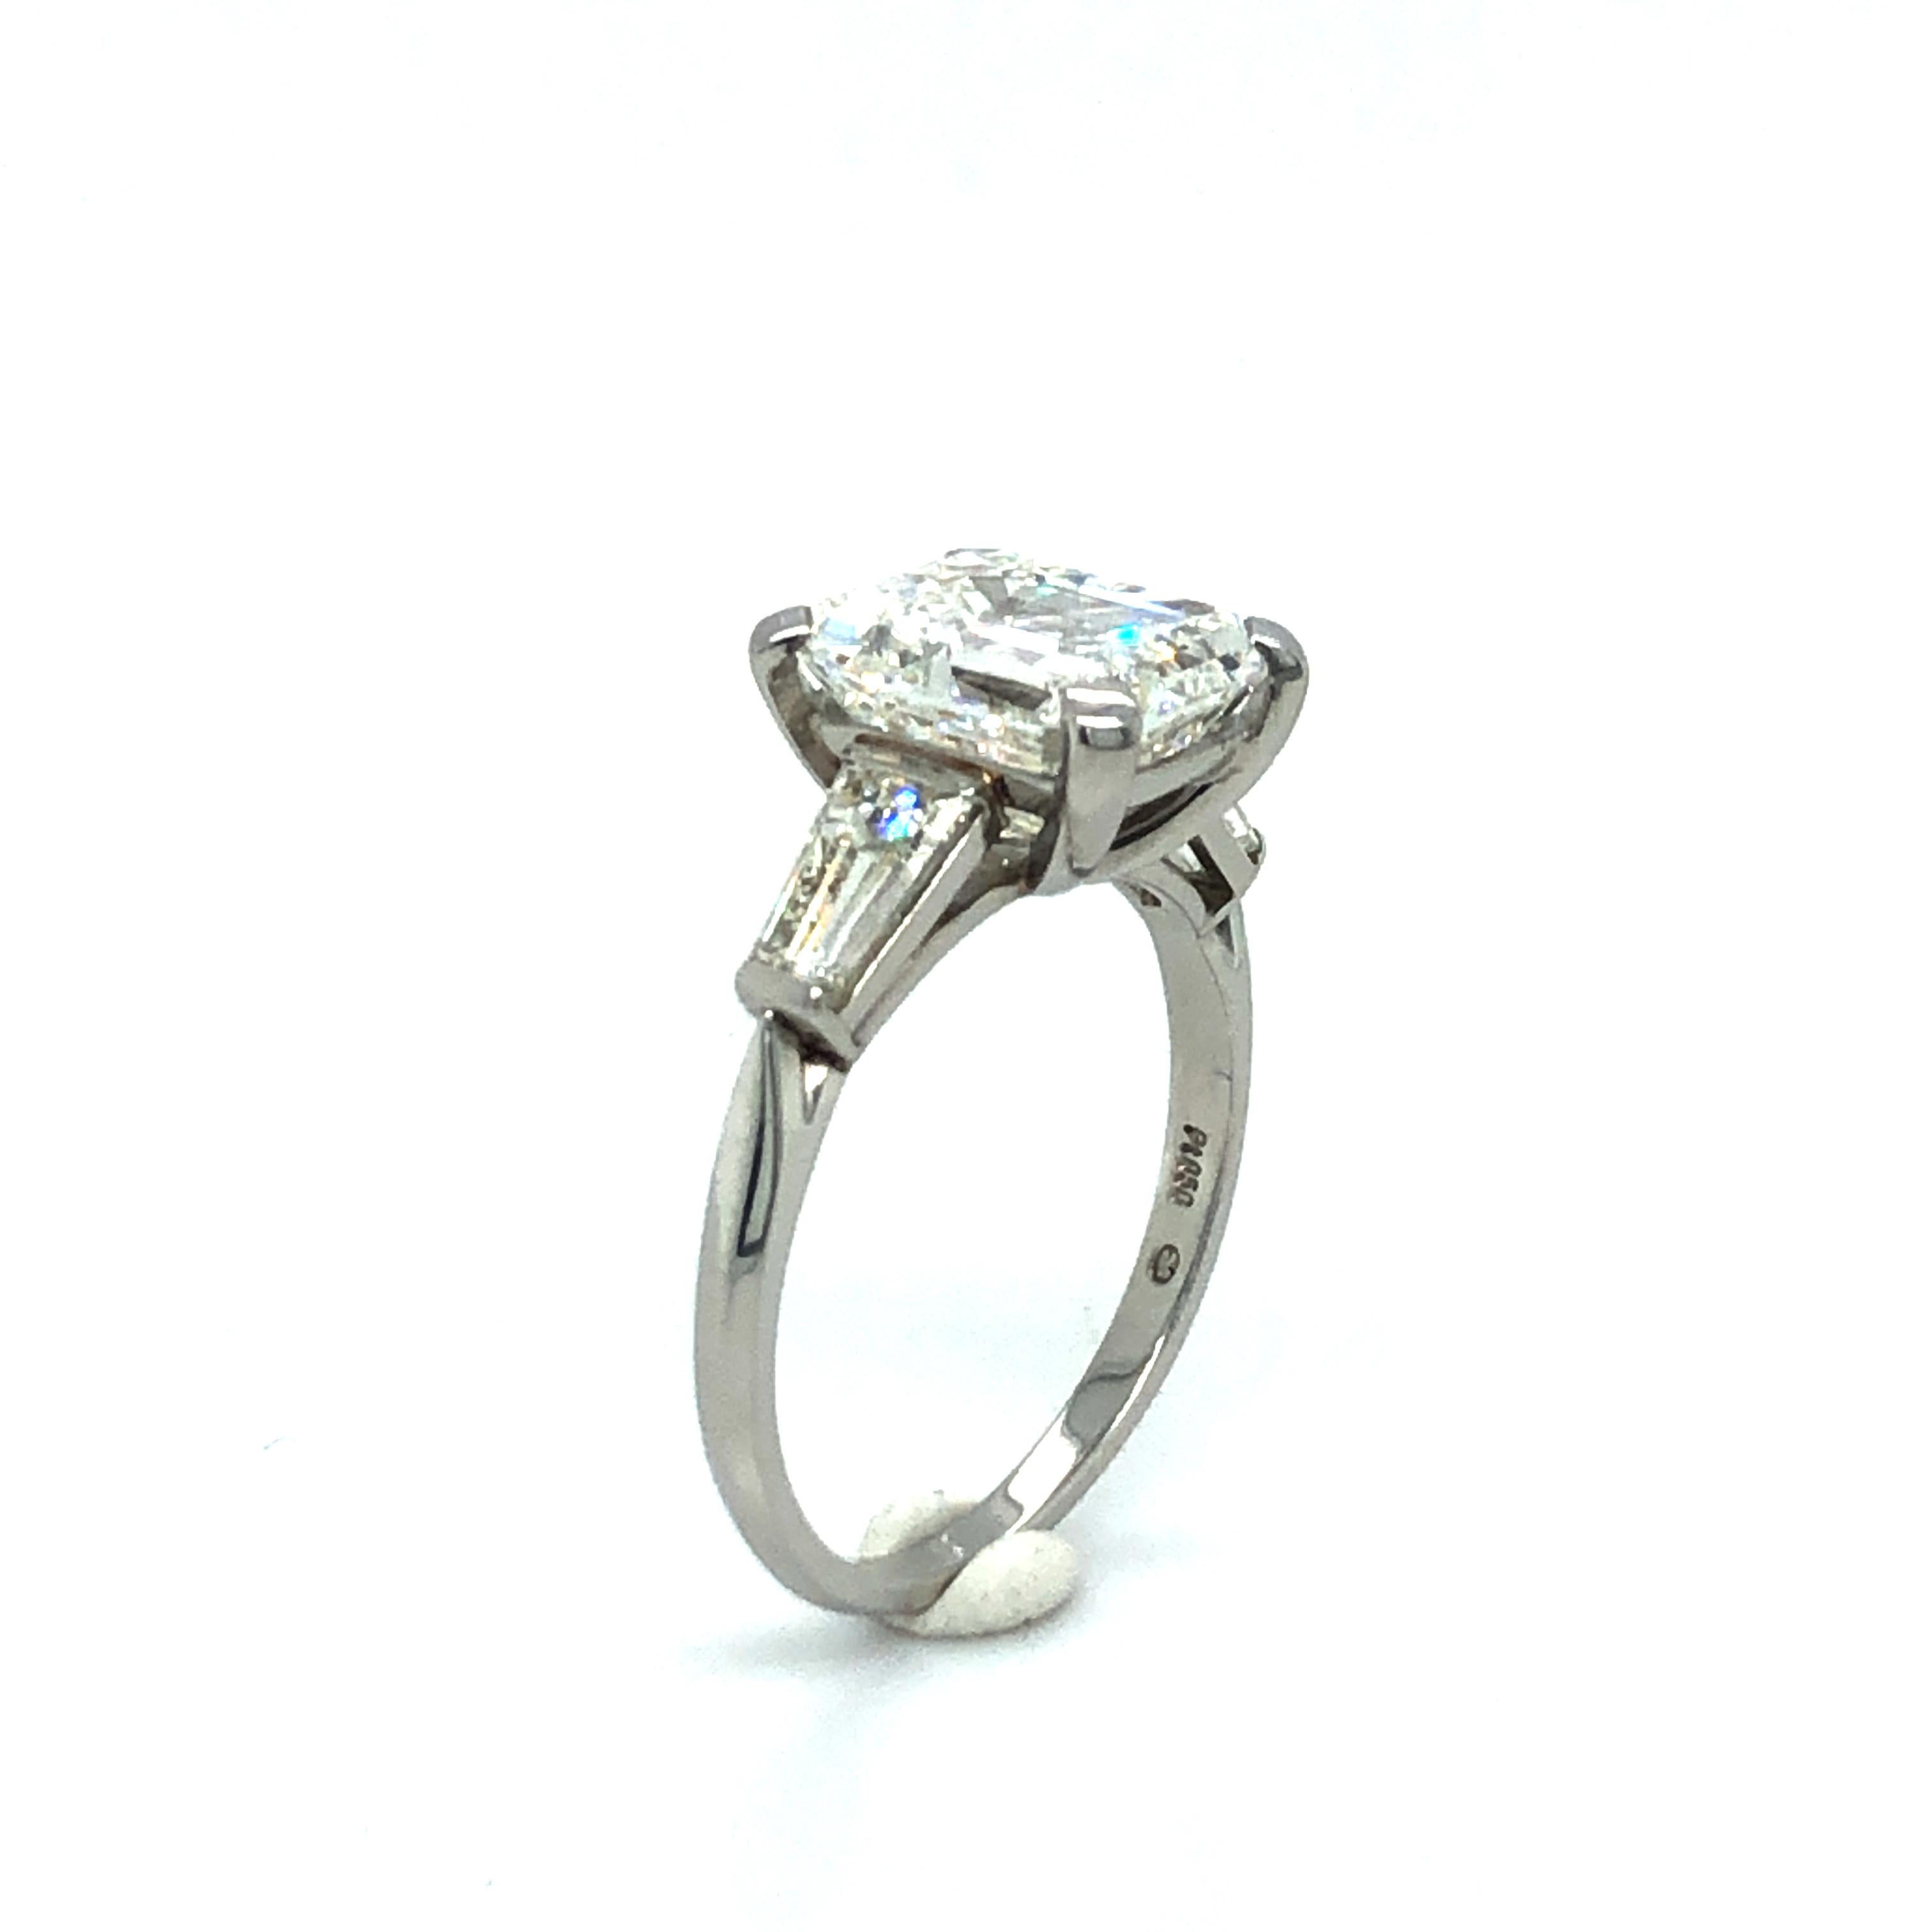 GIA Certified 4.19 Carat Emerald Cut Diamond Ring in Platinum 950 2